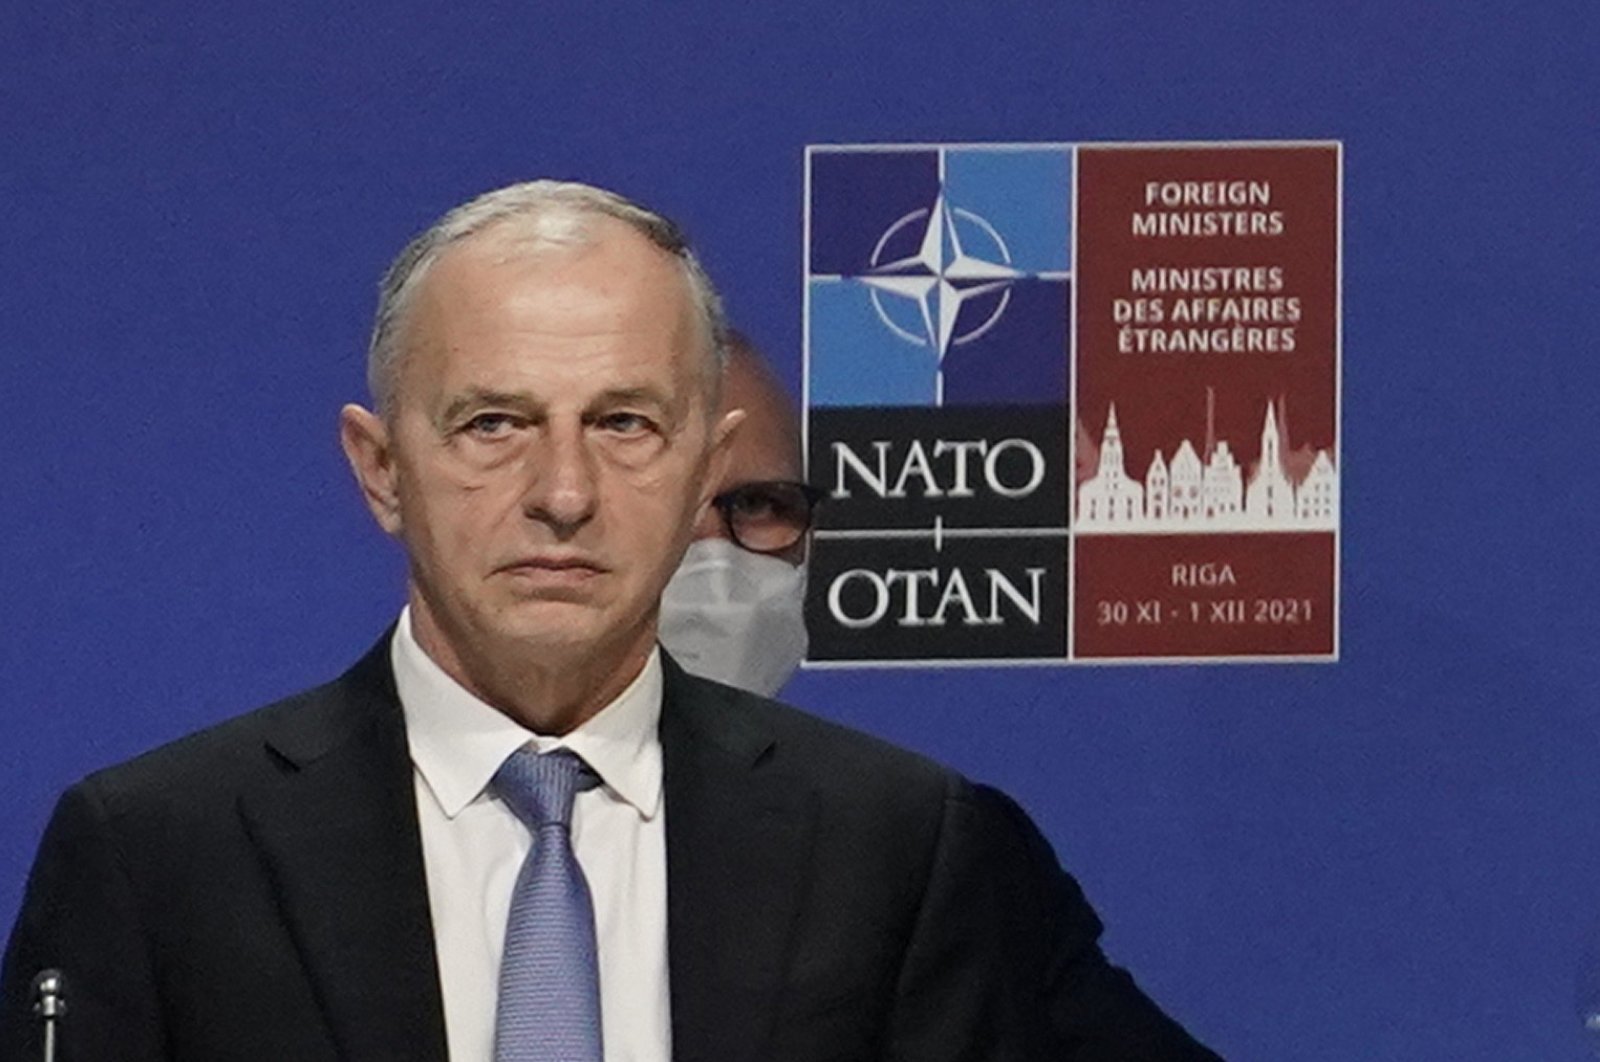 Rusia kekurangan pasukan, kapasitas untuk menduduki Ukraina, kata wakil NATO